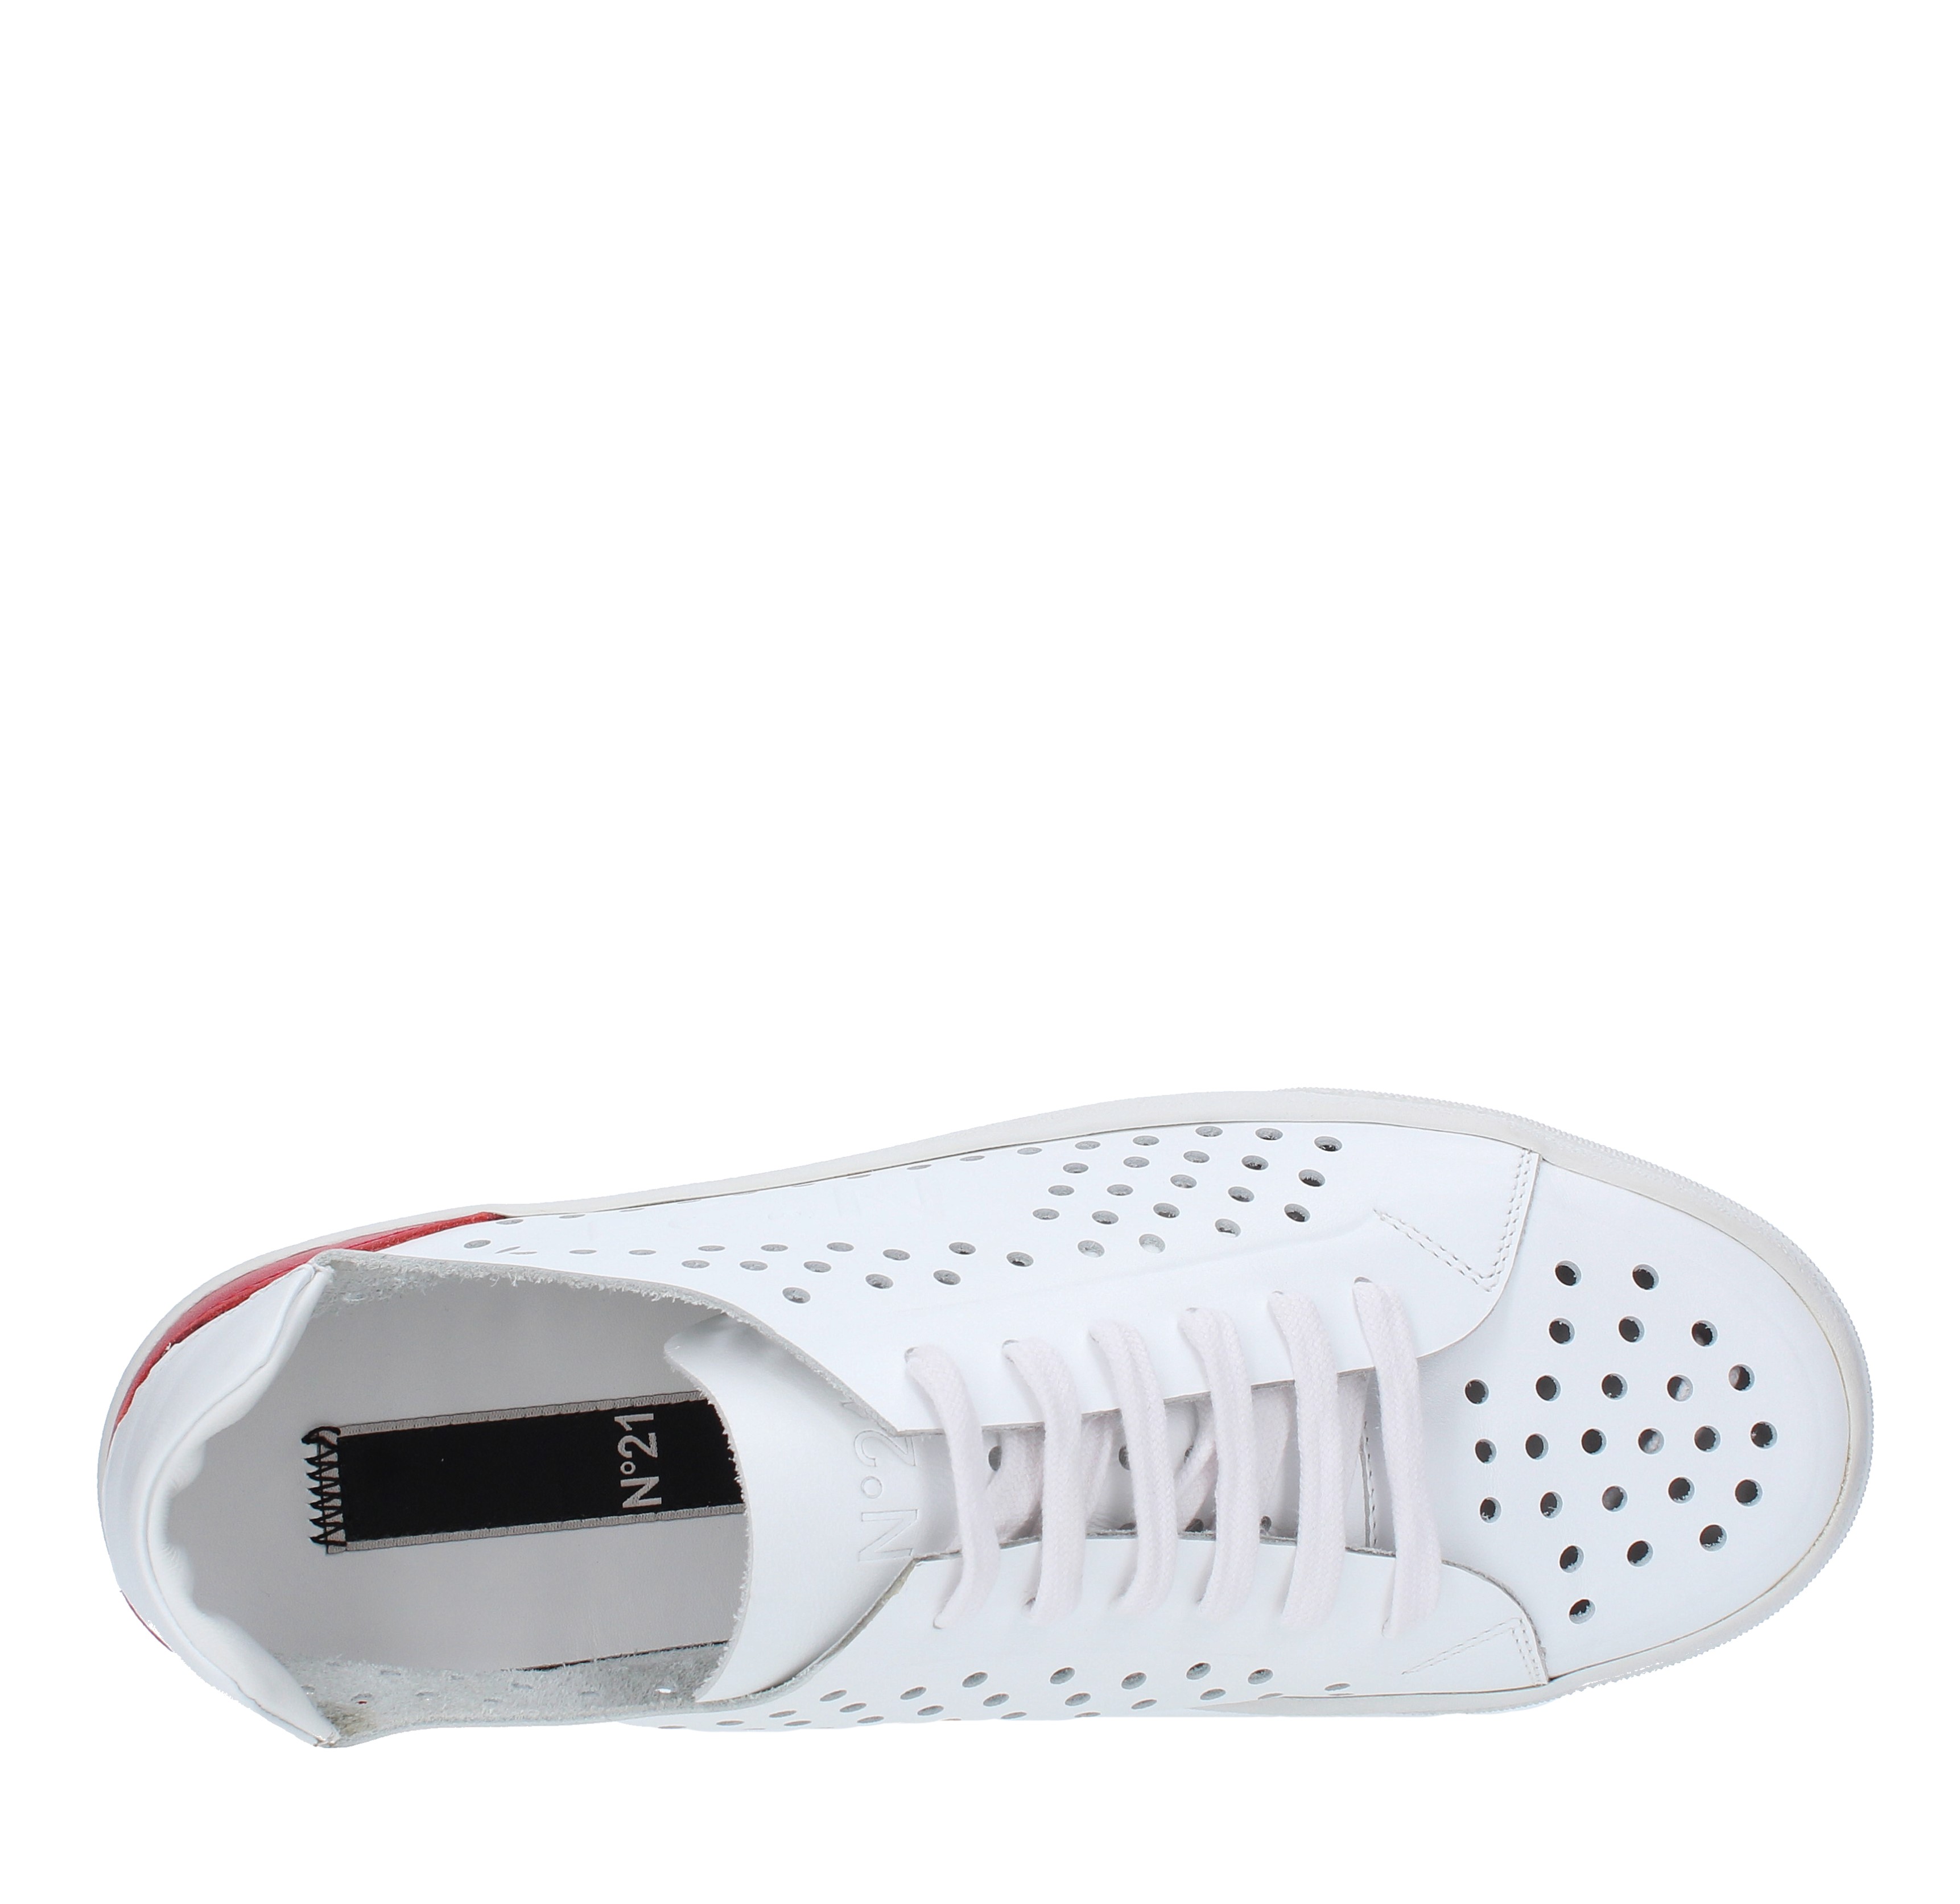 Sneakers in pelle forata - N°21 - Ginevra calzature